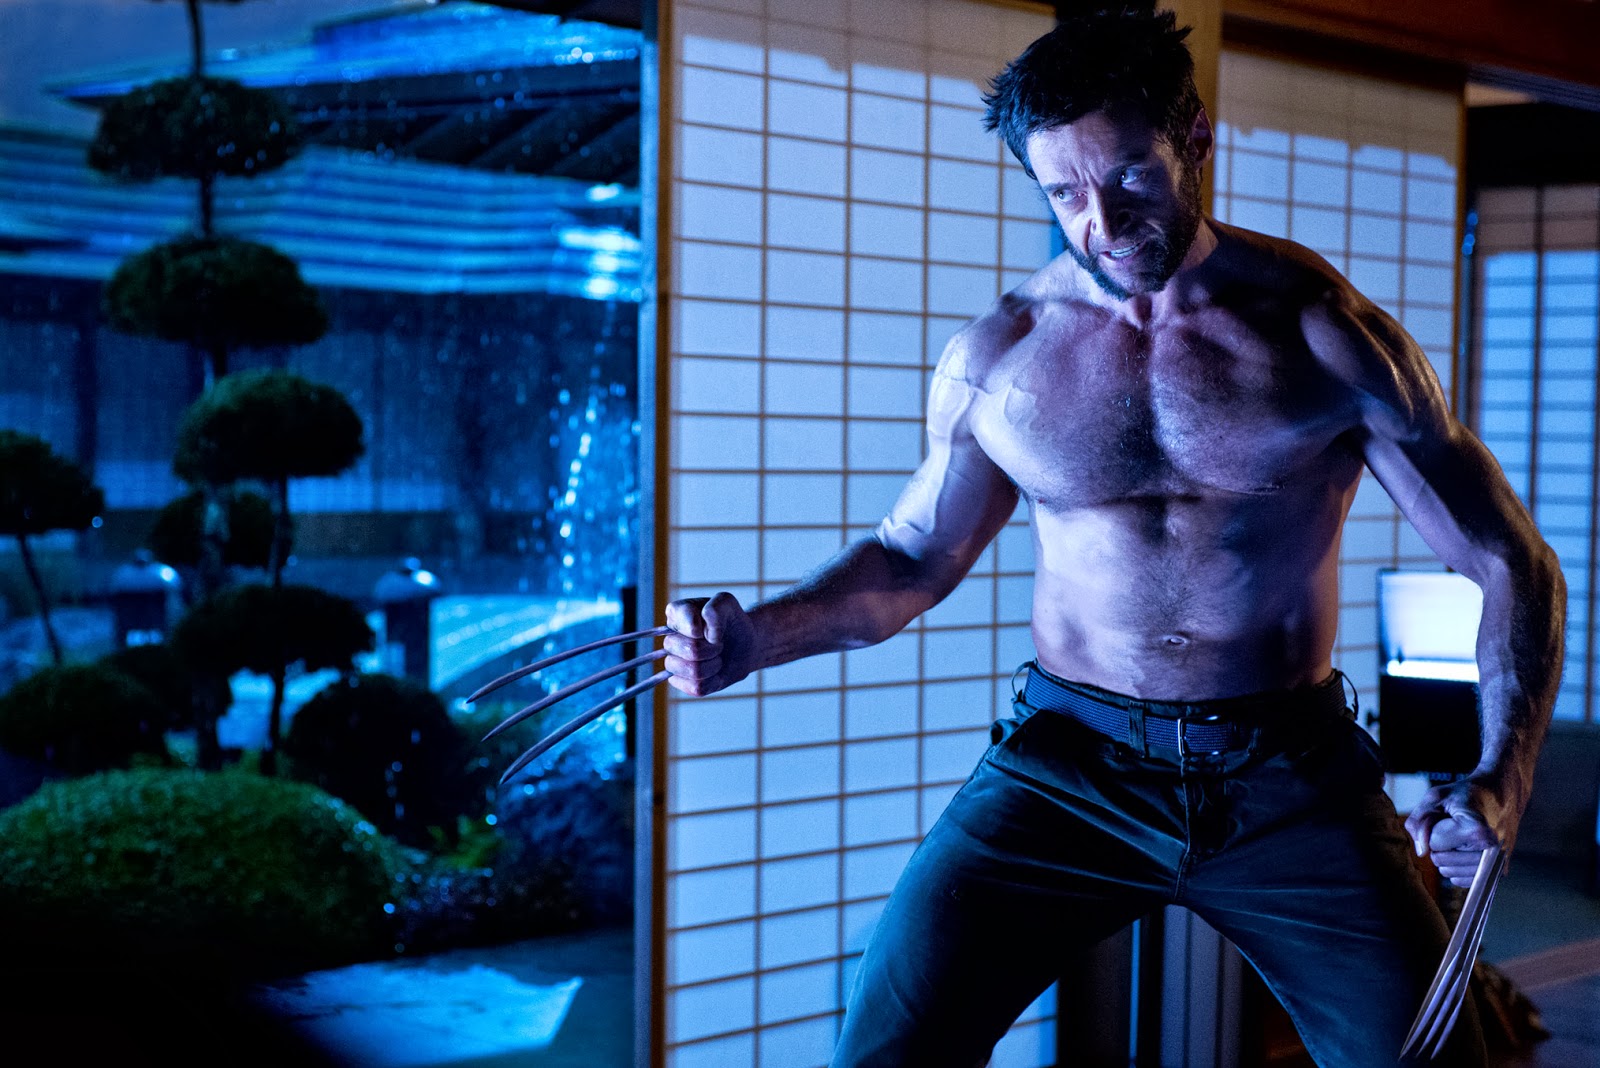 ｃｉａ こちら映画中央情報局です The Wolverine ヒュー ジャックマン単独主演のx Menシリーズ最新作 ザ ウルヴァリン 2 の全米公開日が 3年後の17年3月3日に決定